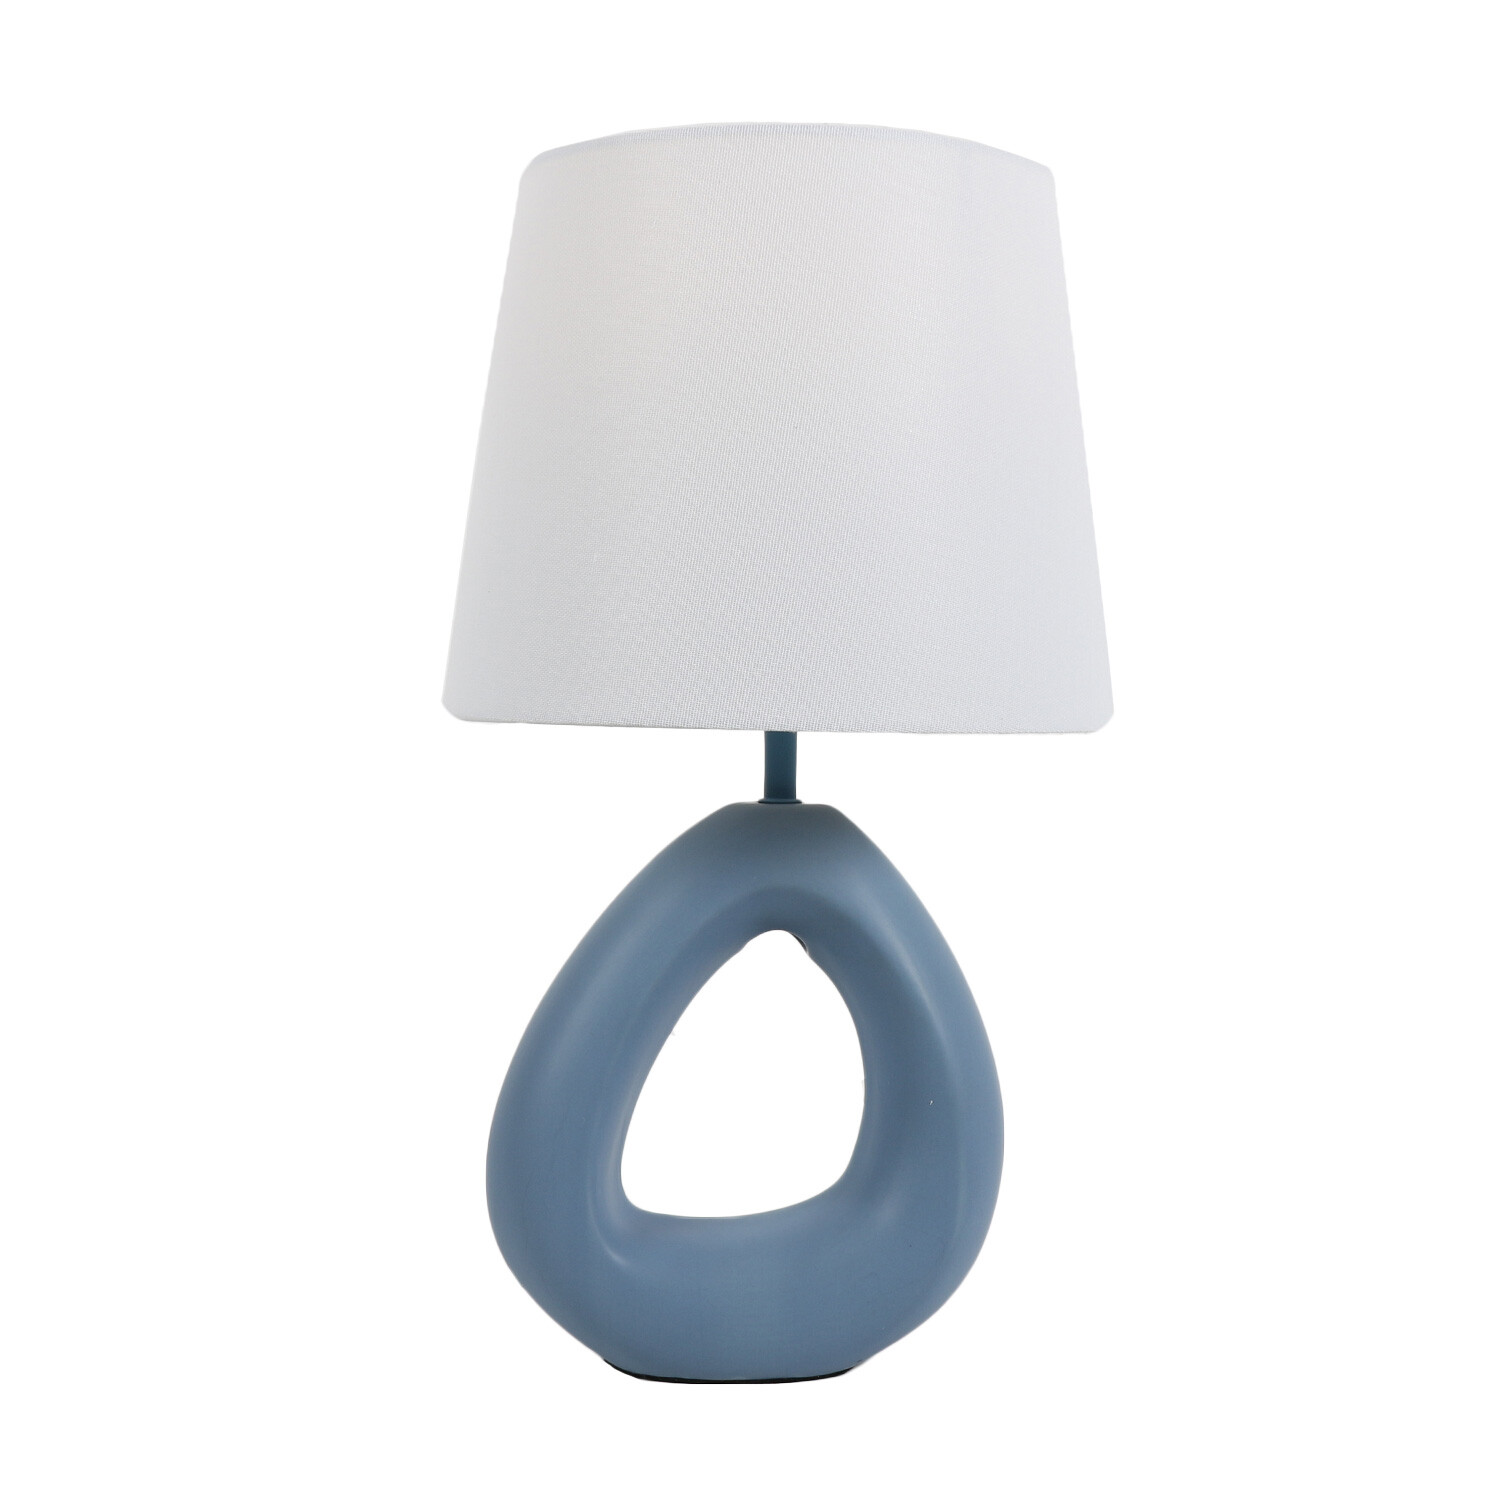 Saylor Table Lamp - Blue Image 2